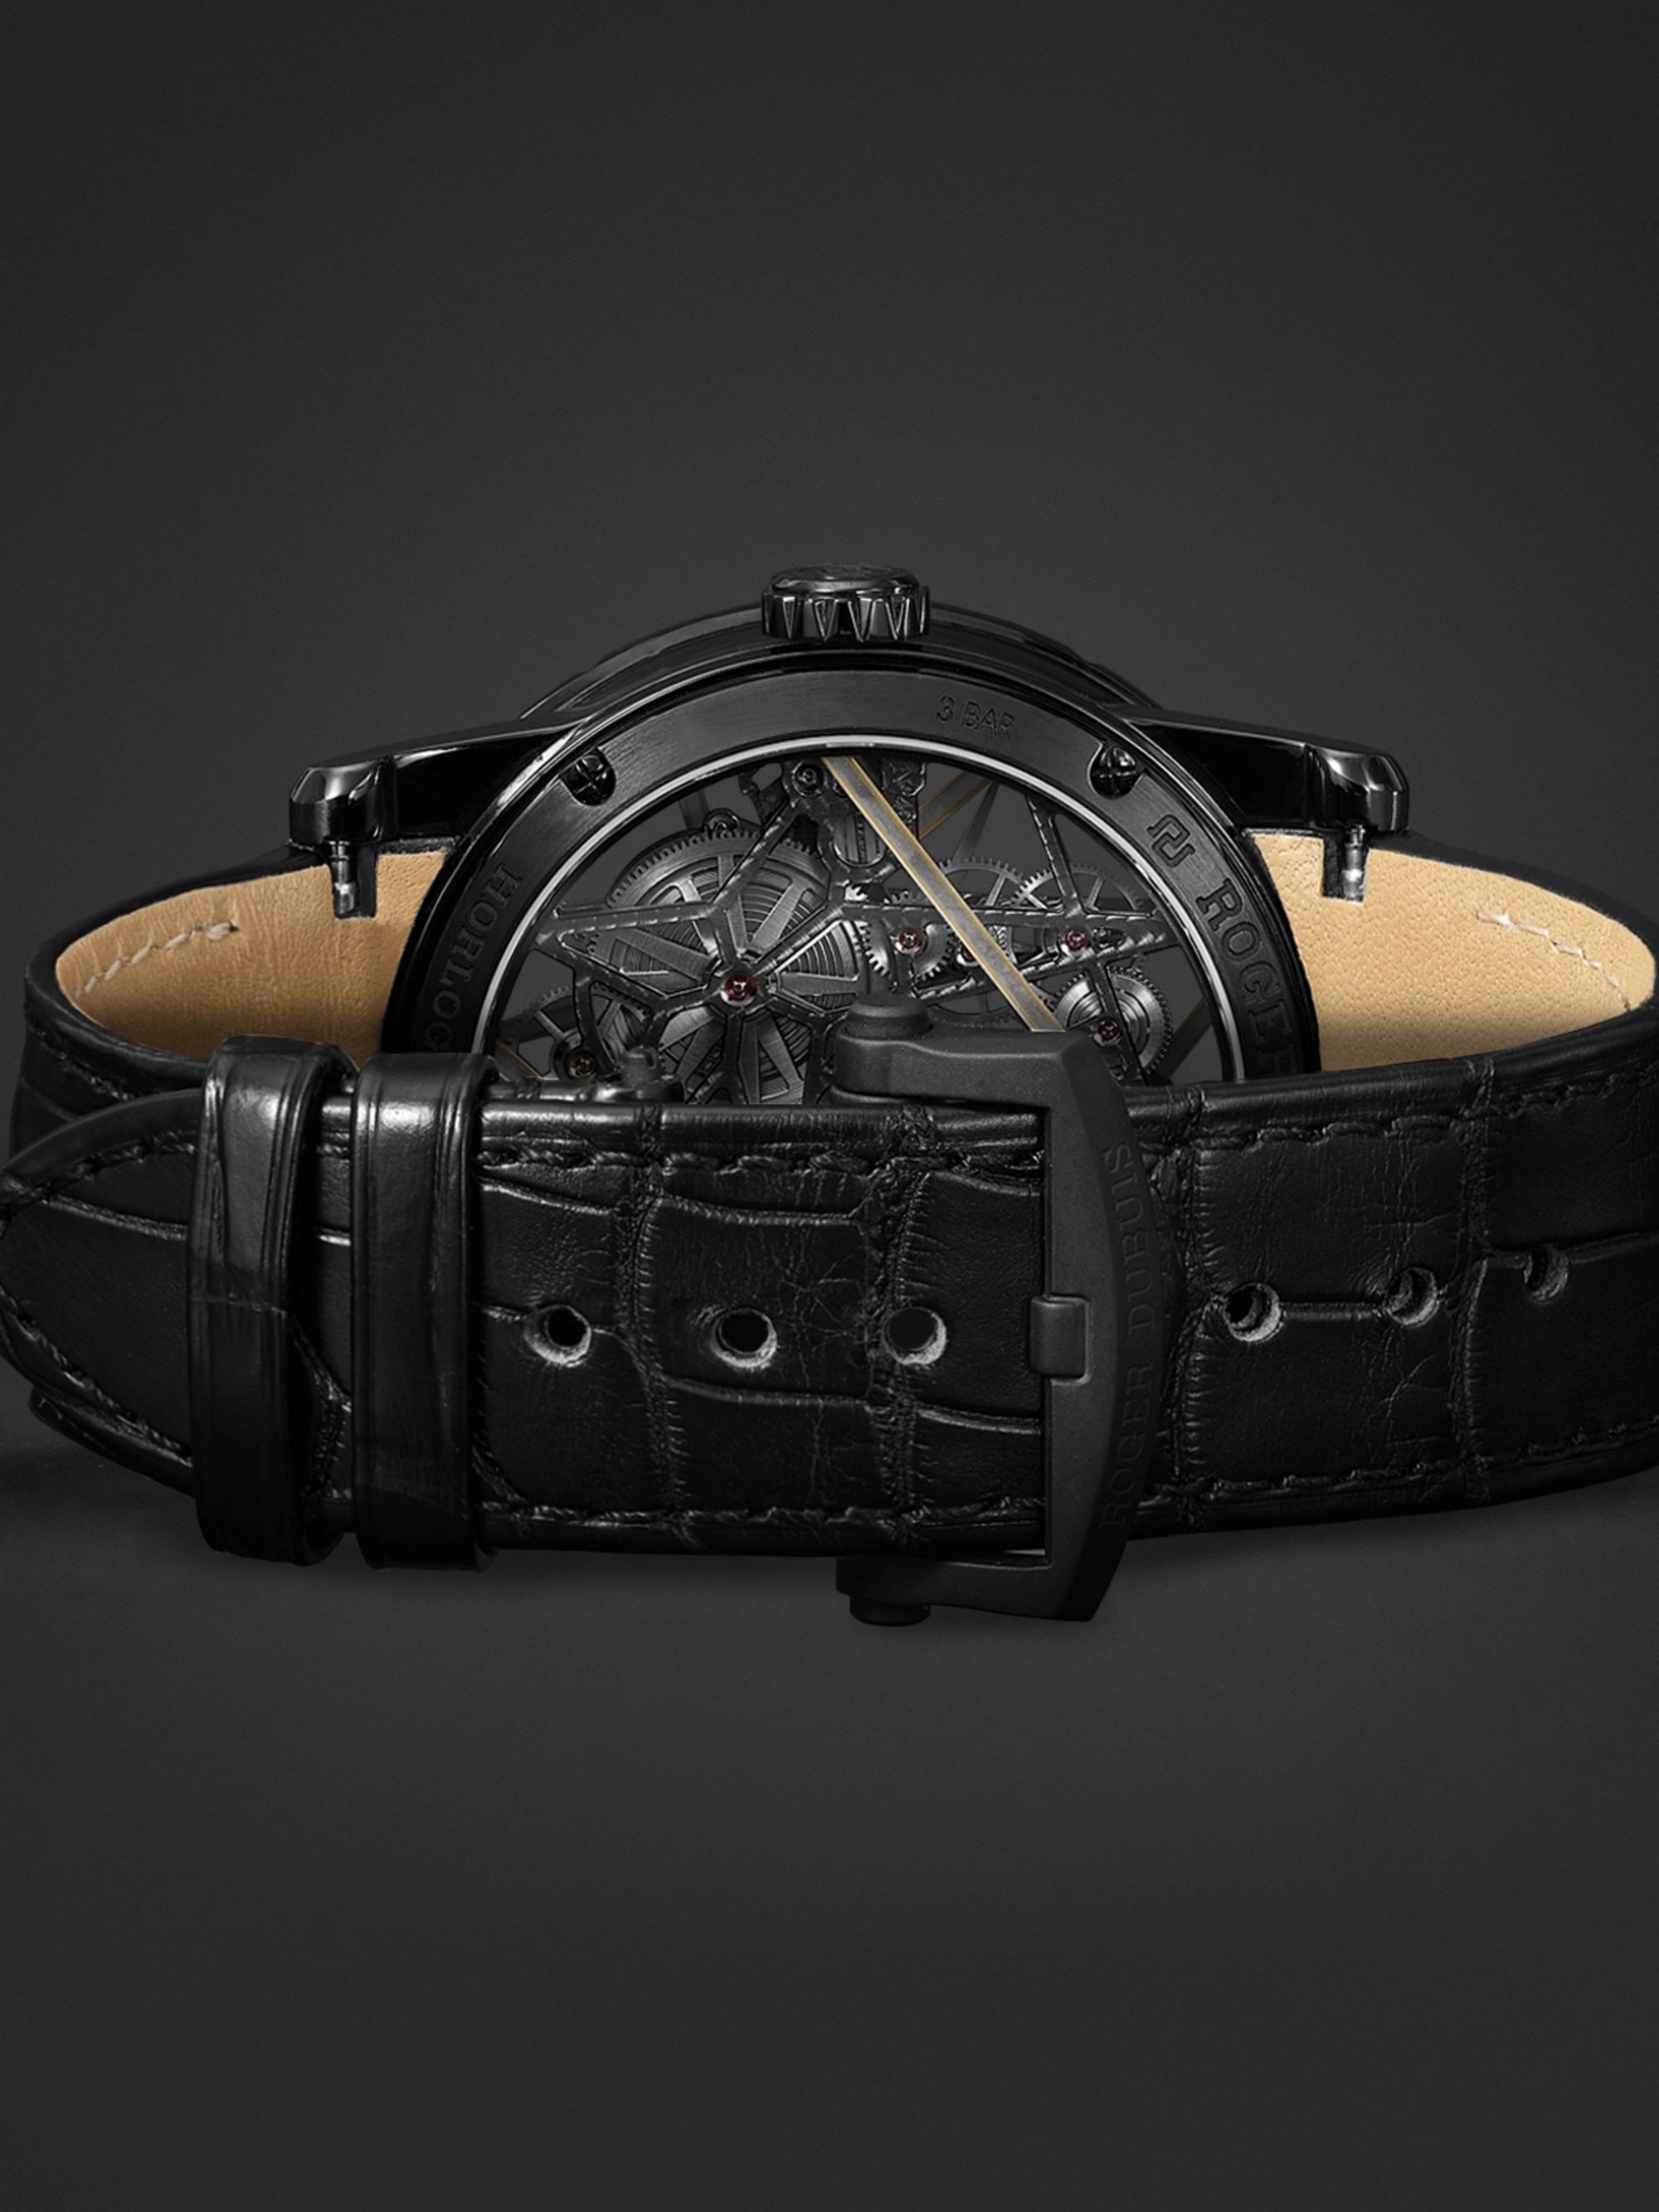 ROGER DUBUIS Excalibur Blacklight Black DLC Limited Edition Automatic Skeleton 42mm Titanium and Alligator Watch, Ref. No. RDDBEX0756